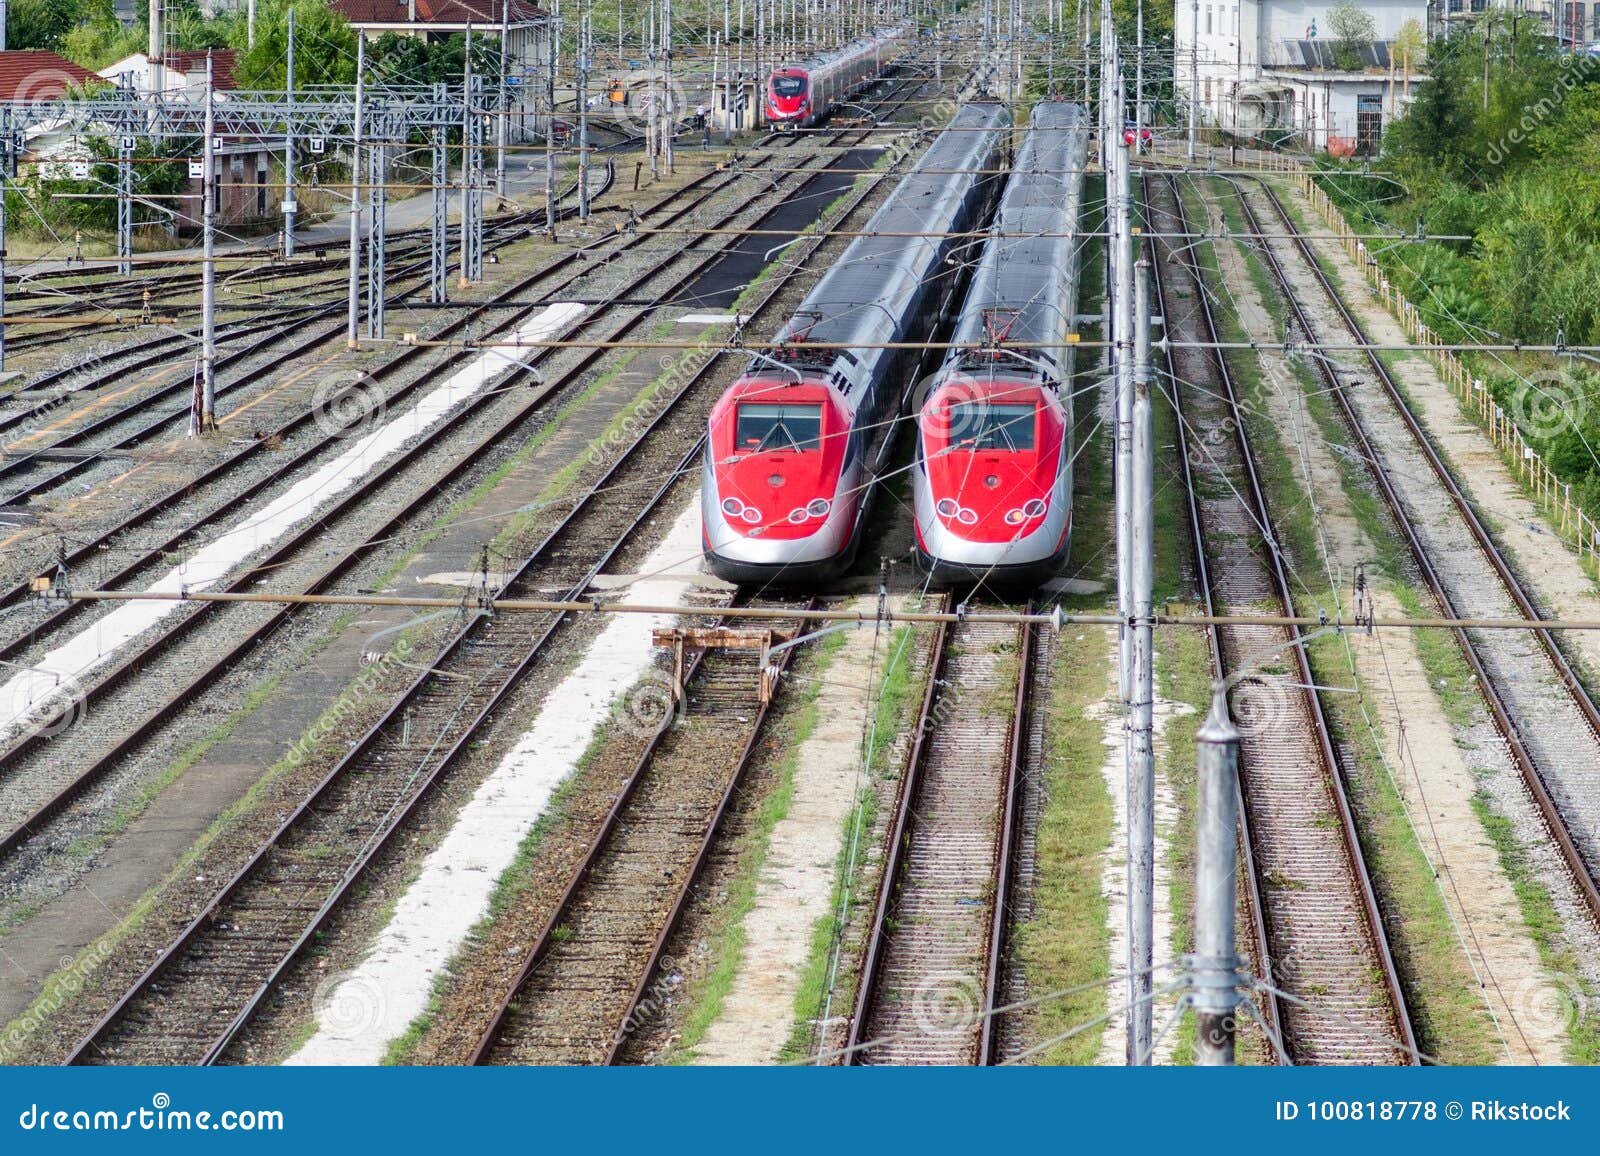 high-speed trains on tracks